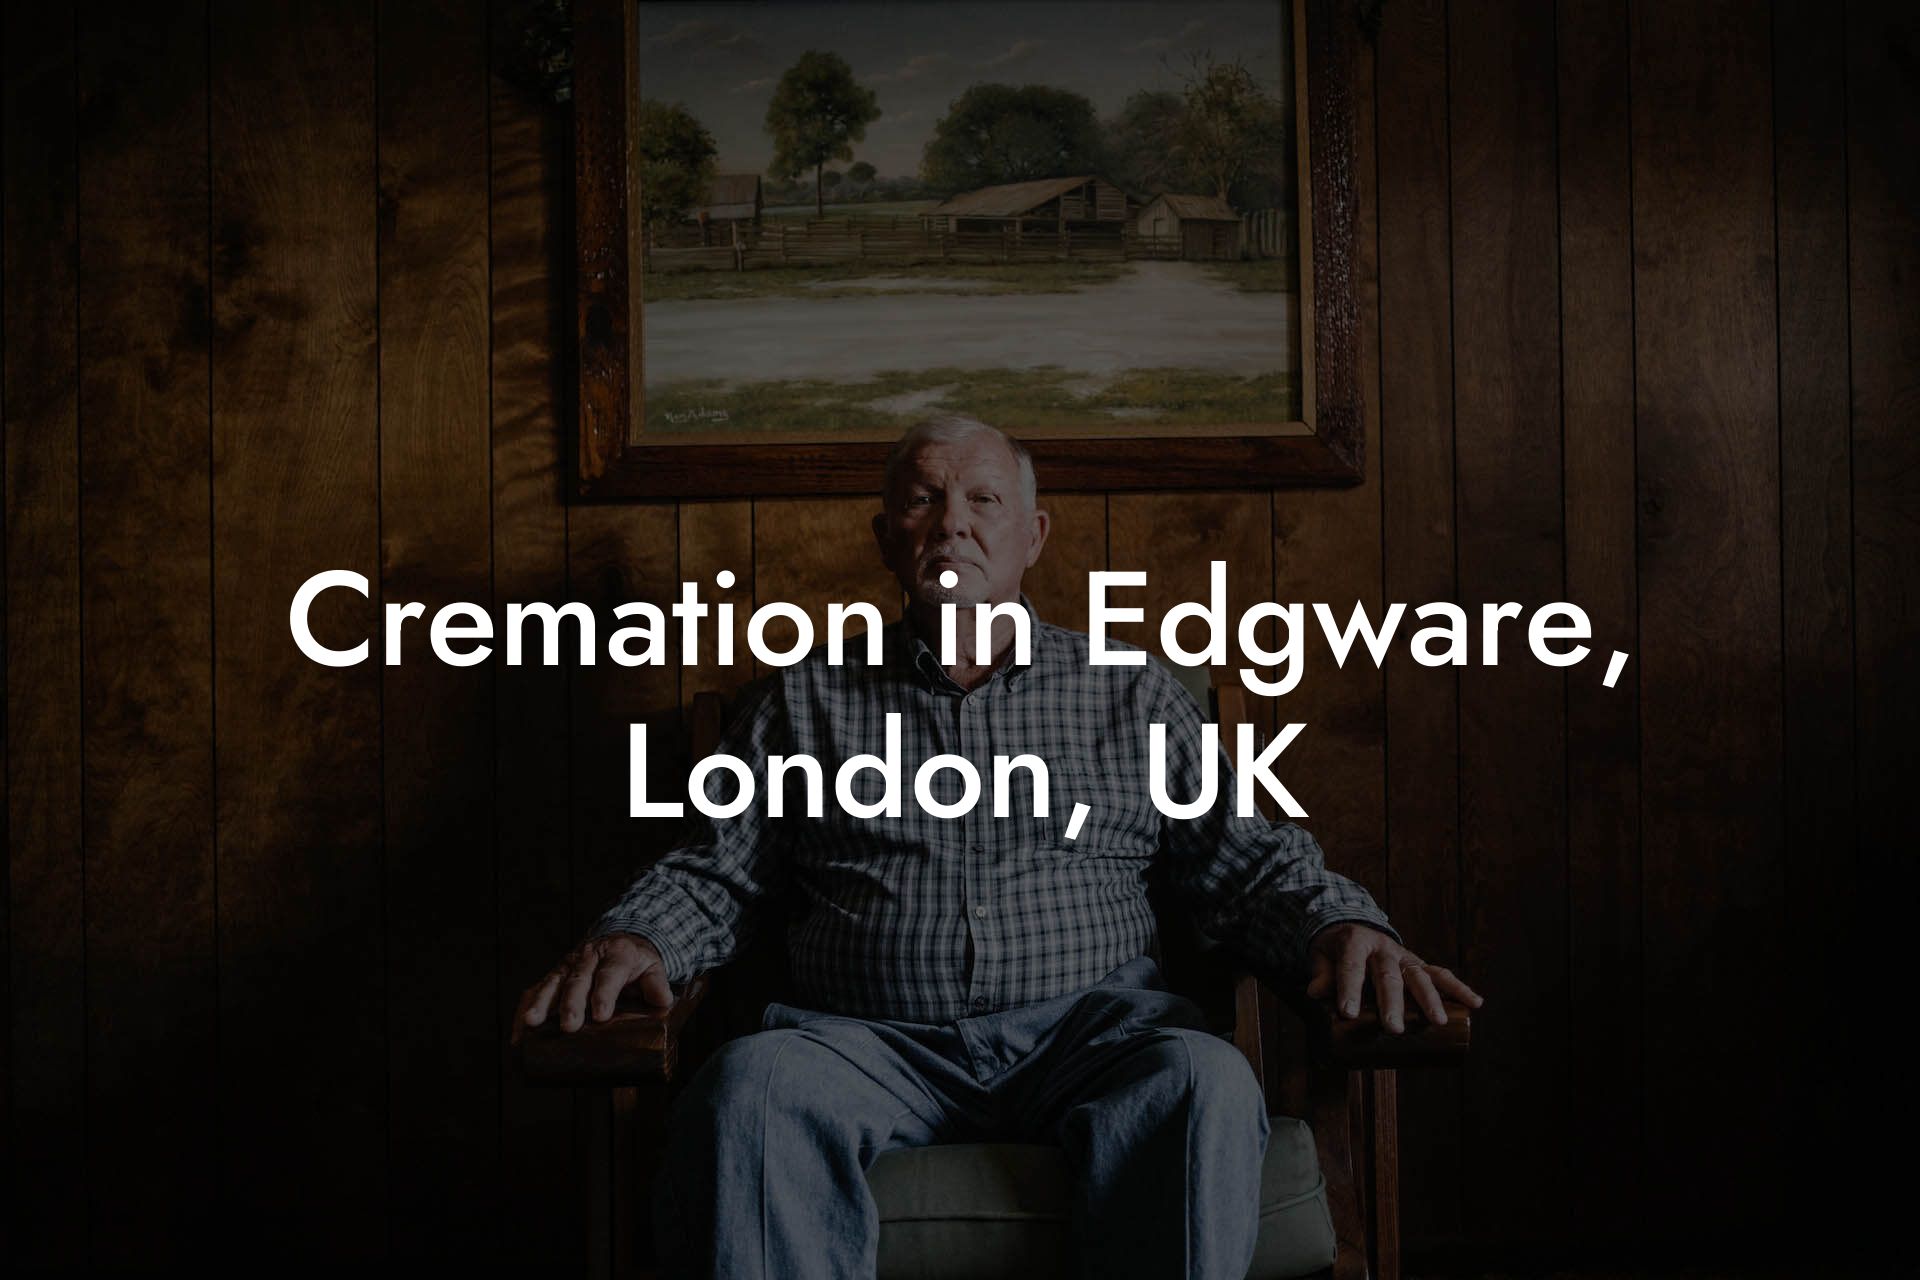 Cremation in Edgware, London, UK